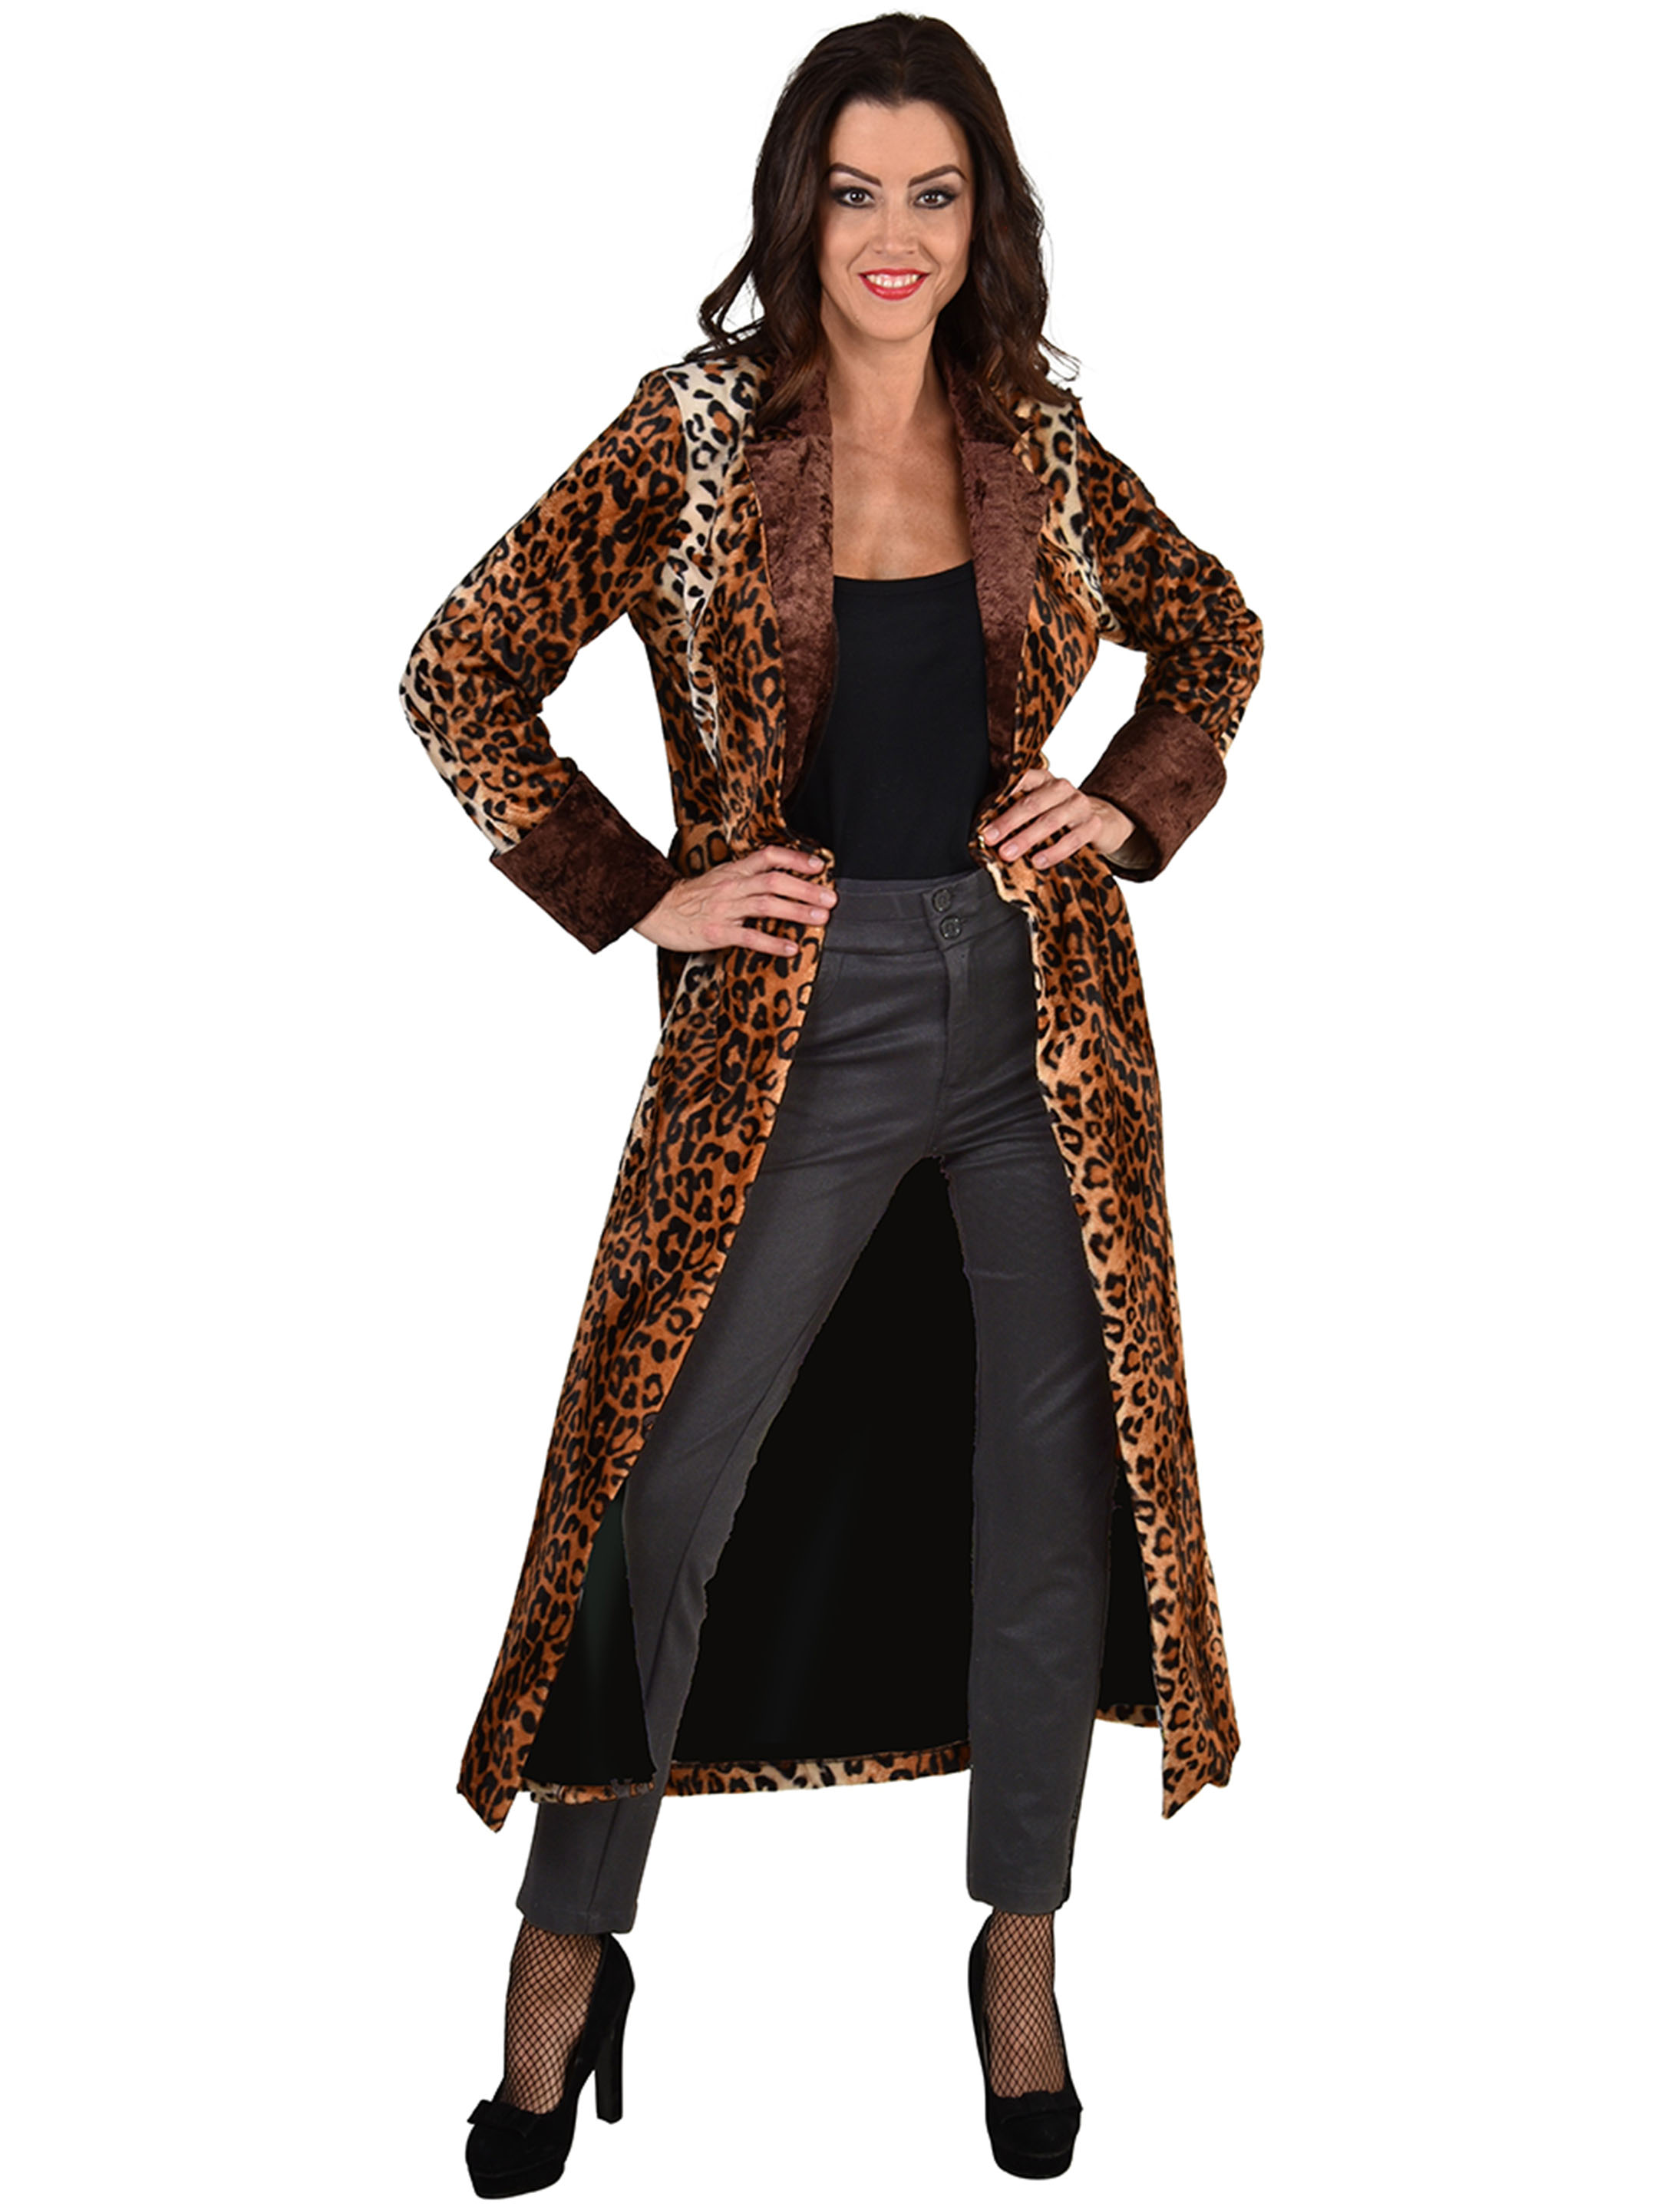 Mantel Leopard Damen schwarz/braun L/XL